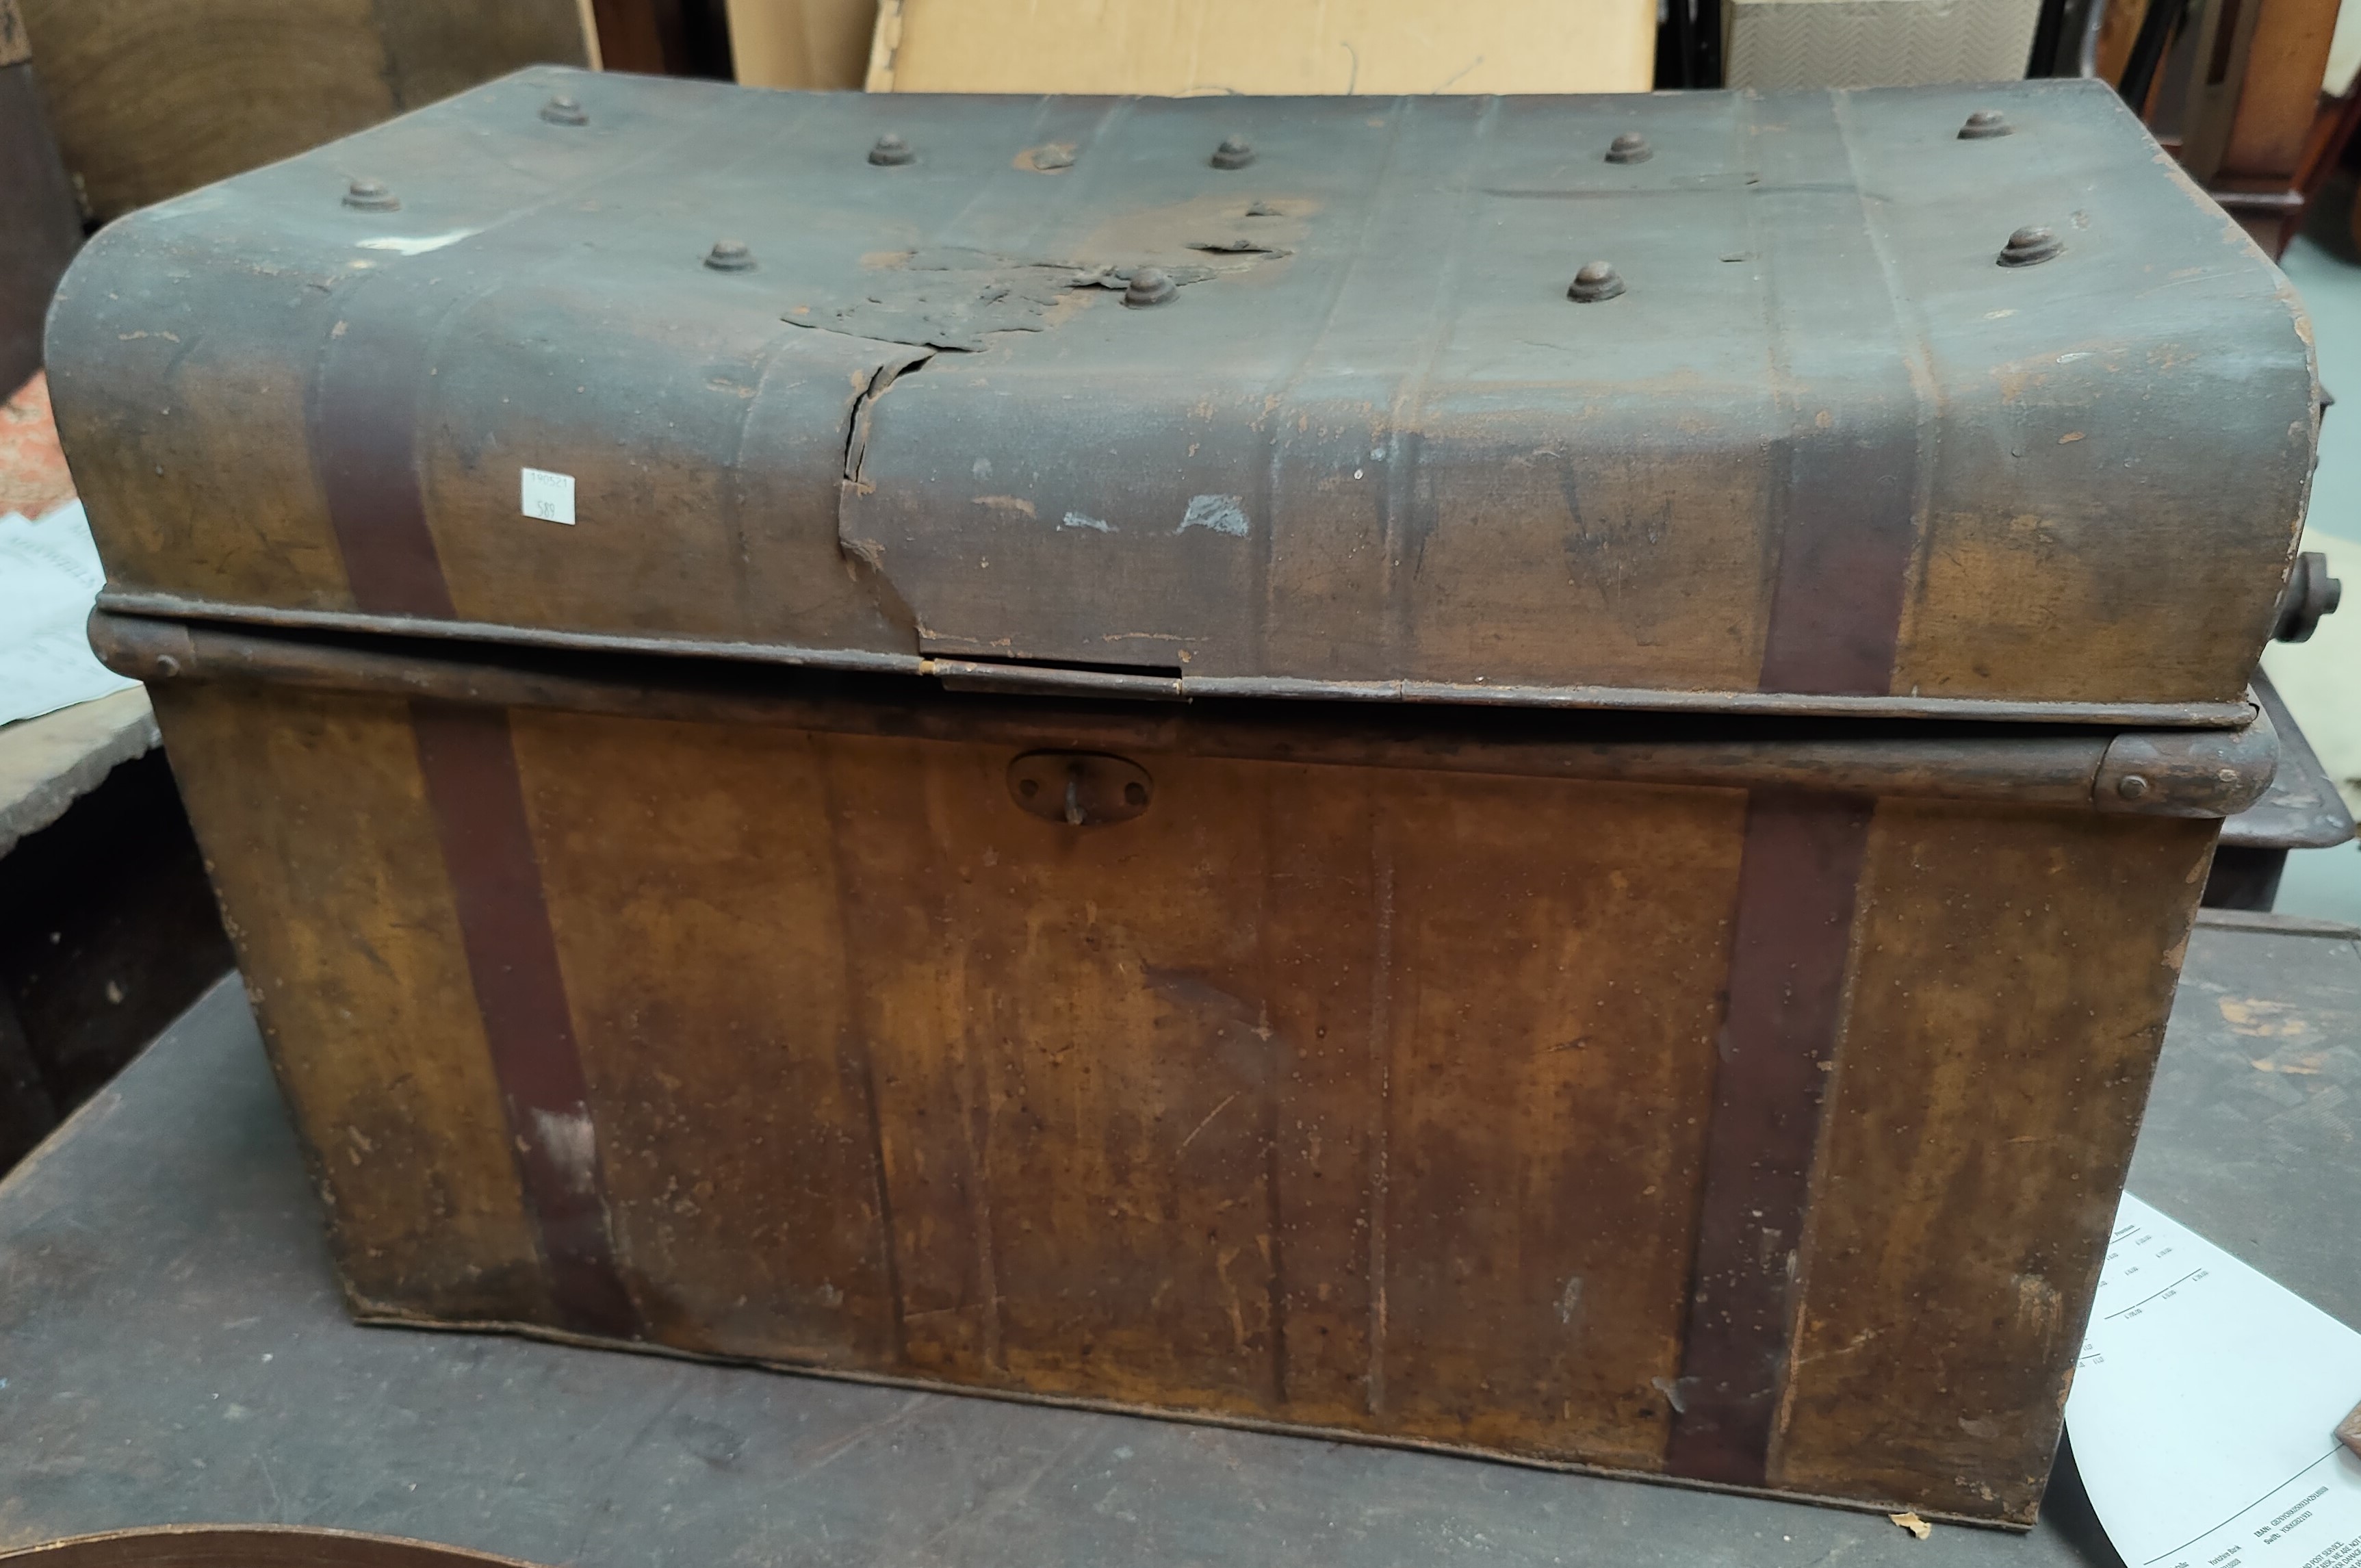 Two 19th century tin trunks